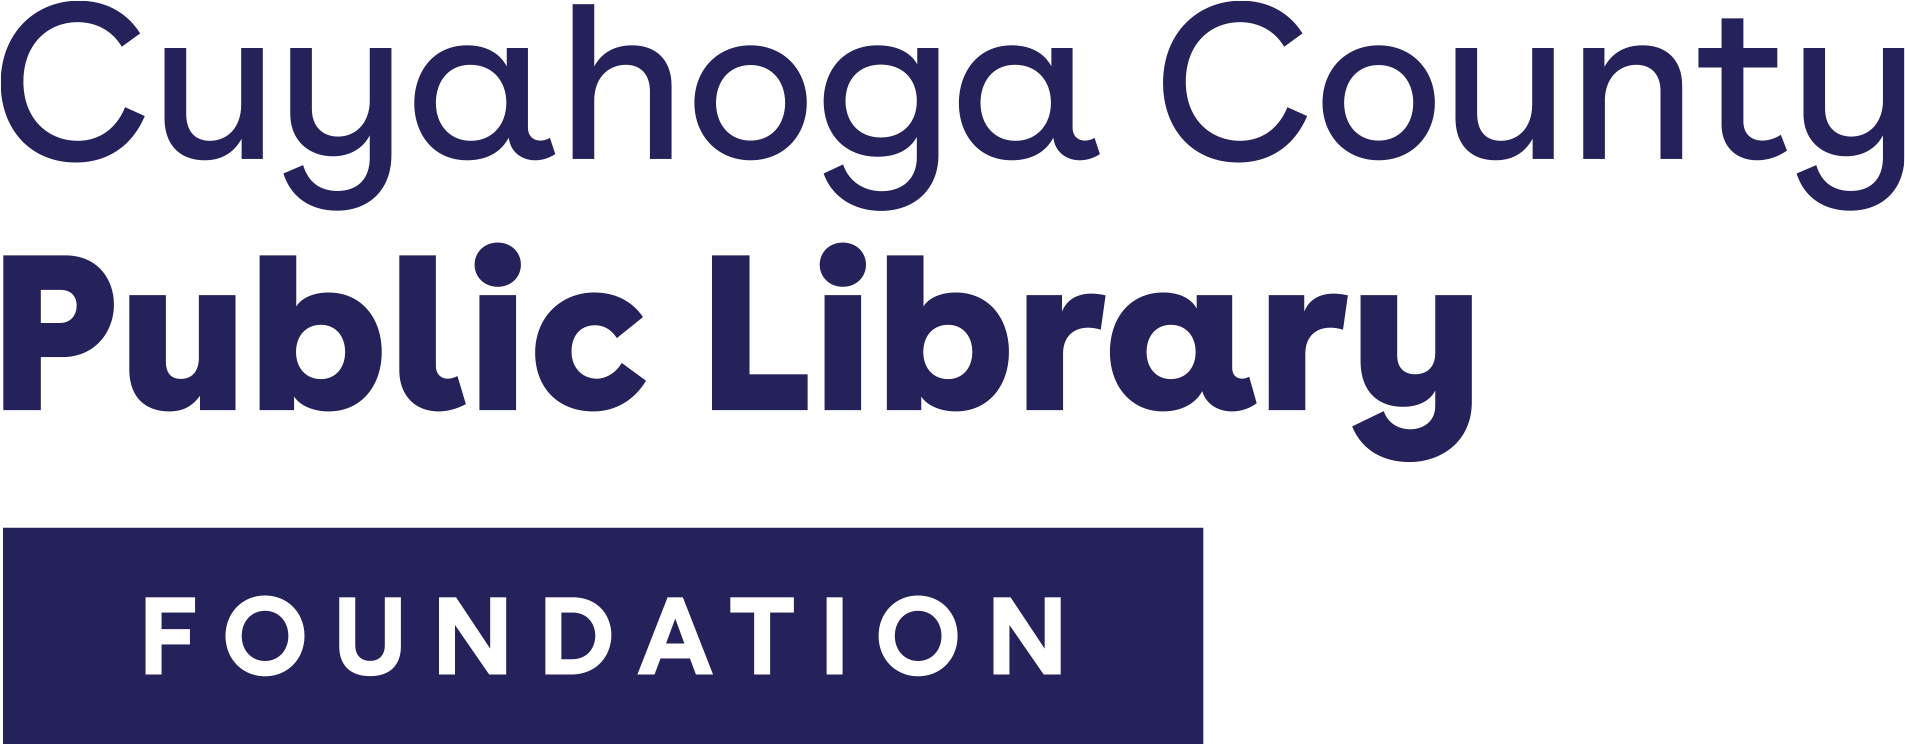 Cuyahoga County Public Library Foundation